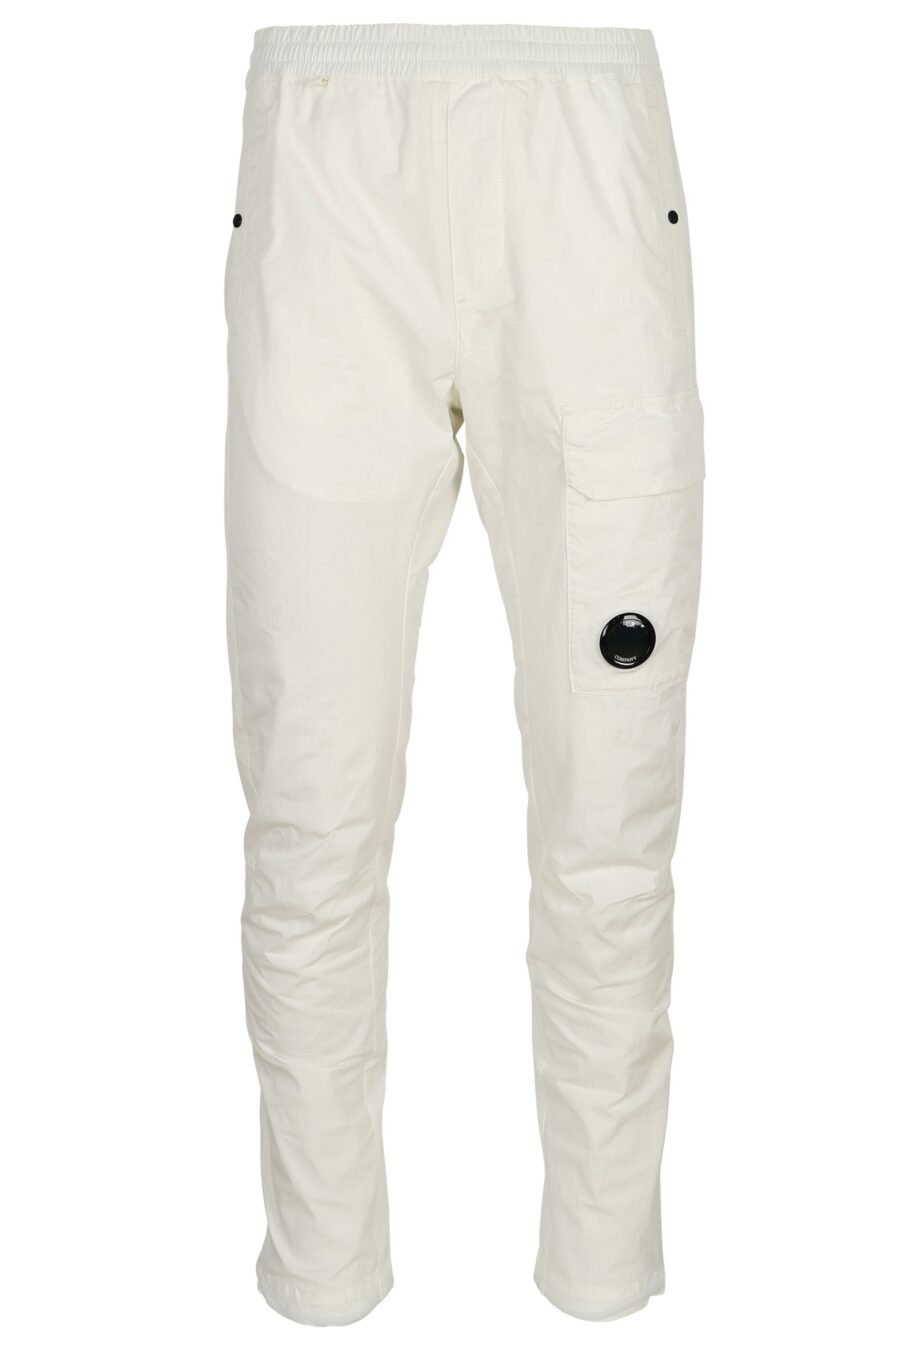 Pantalon cargo blanc avec mini-logo en lentille - 7620943804751